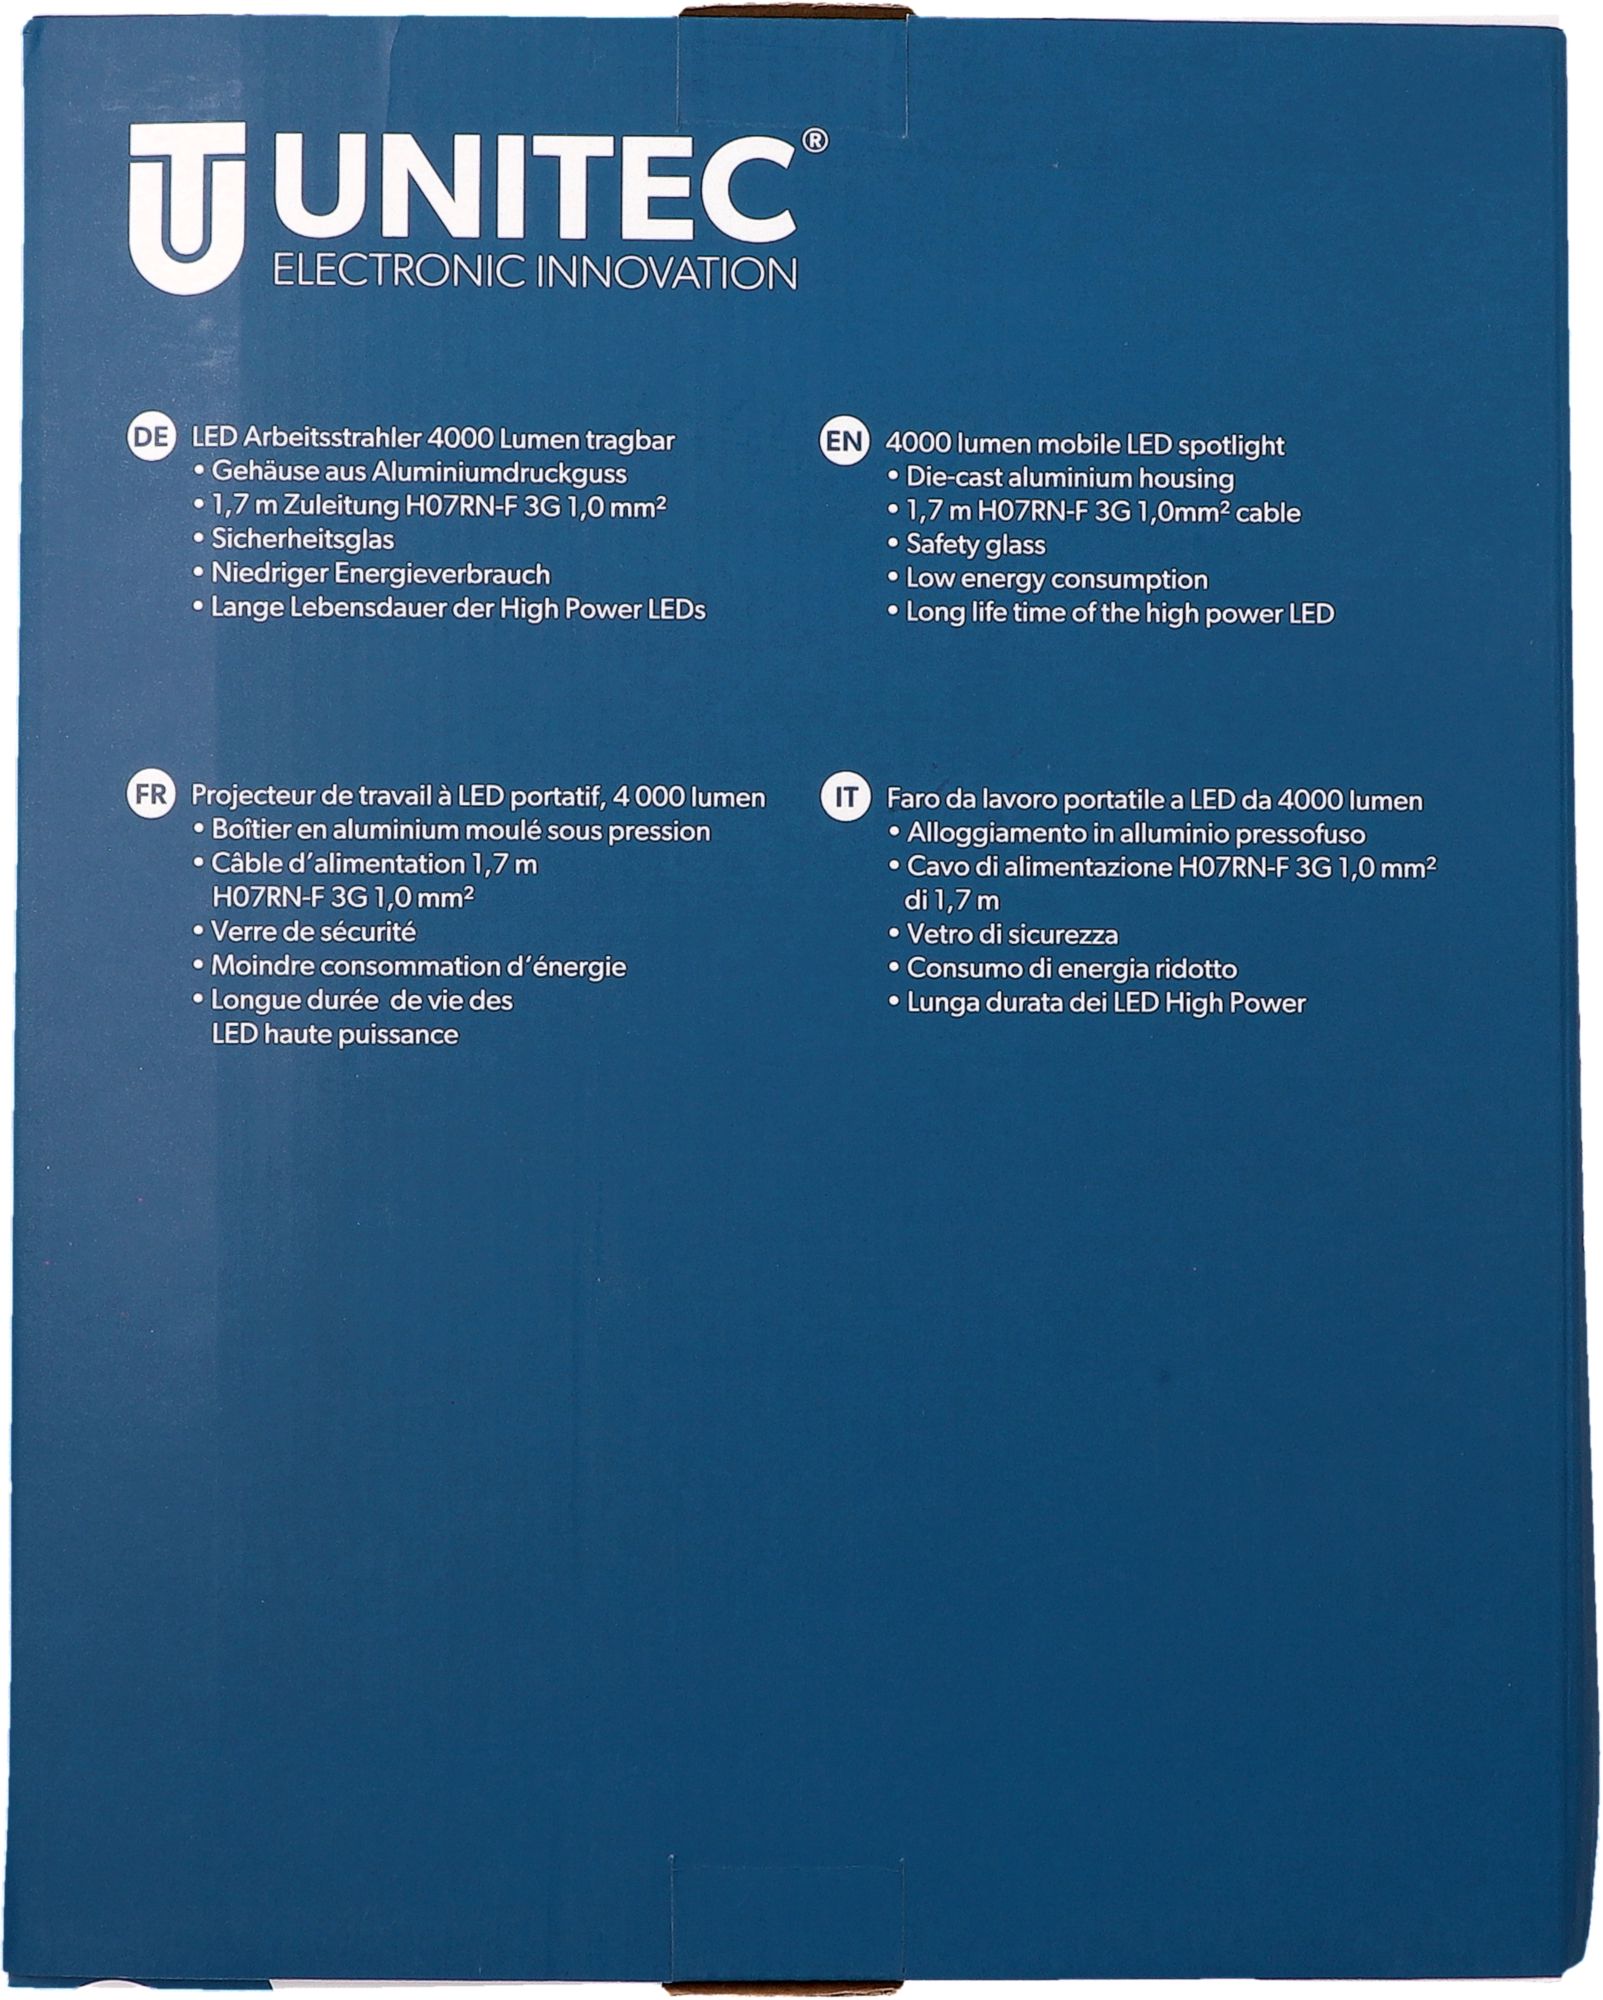 uniTEC LED-Arbeitsstrahler tragbar 50 W,  6500 K, 4000 lm, IP44